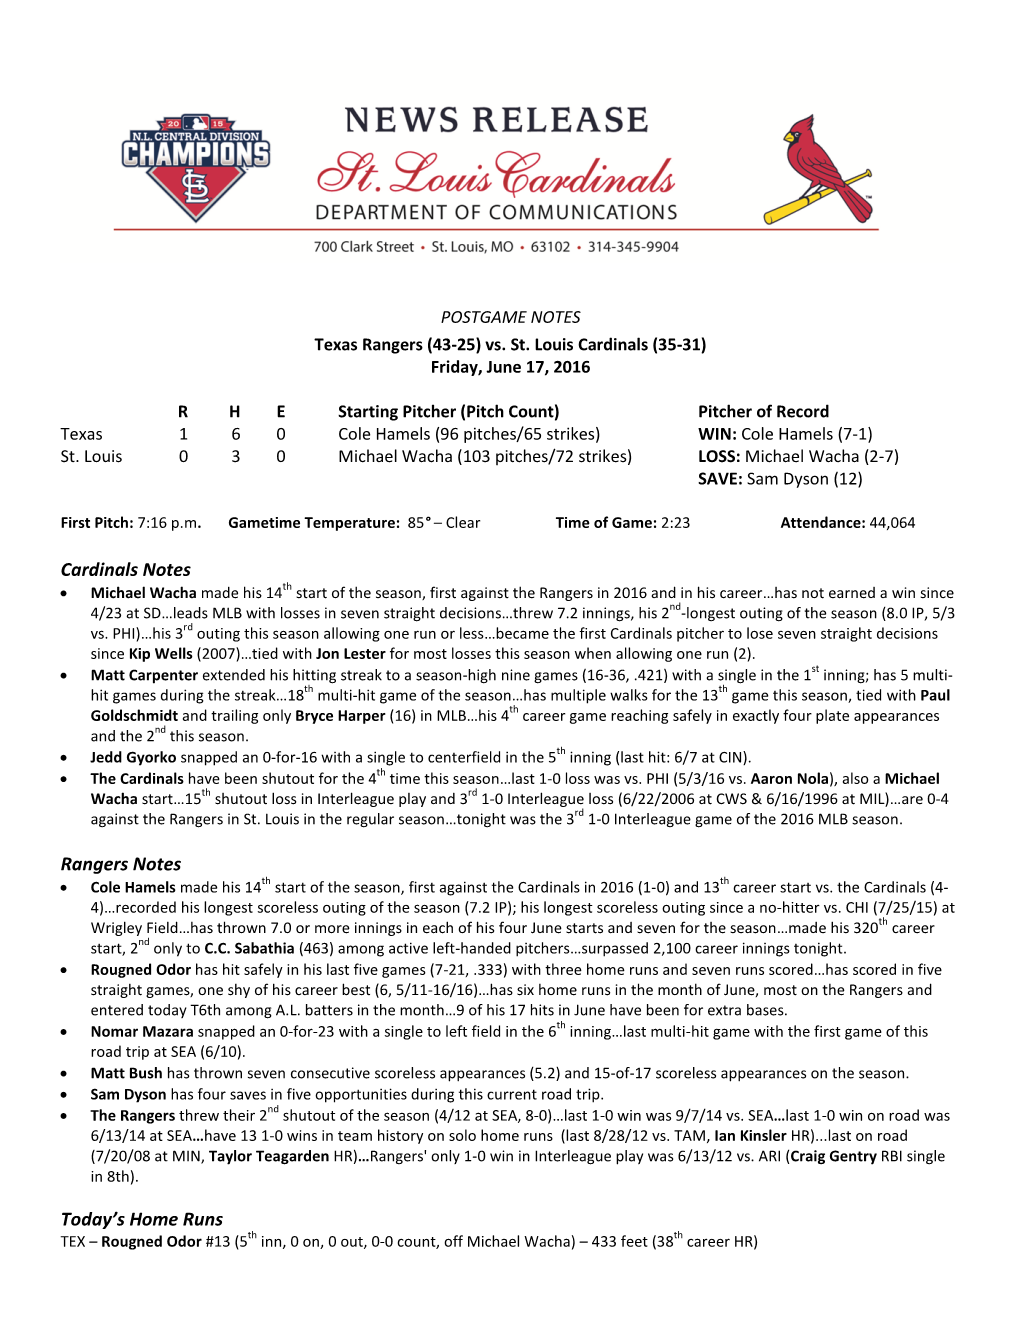 Cardinals Notes Rangers Notes Today's Home Runs